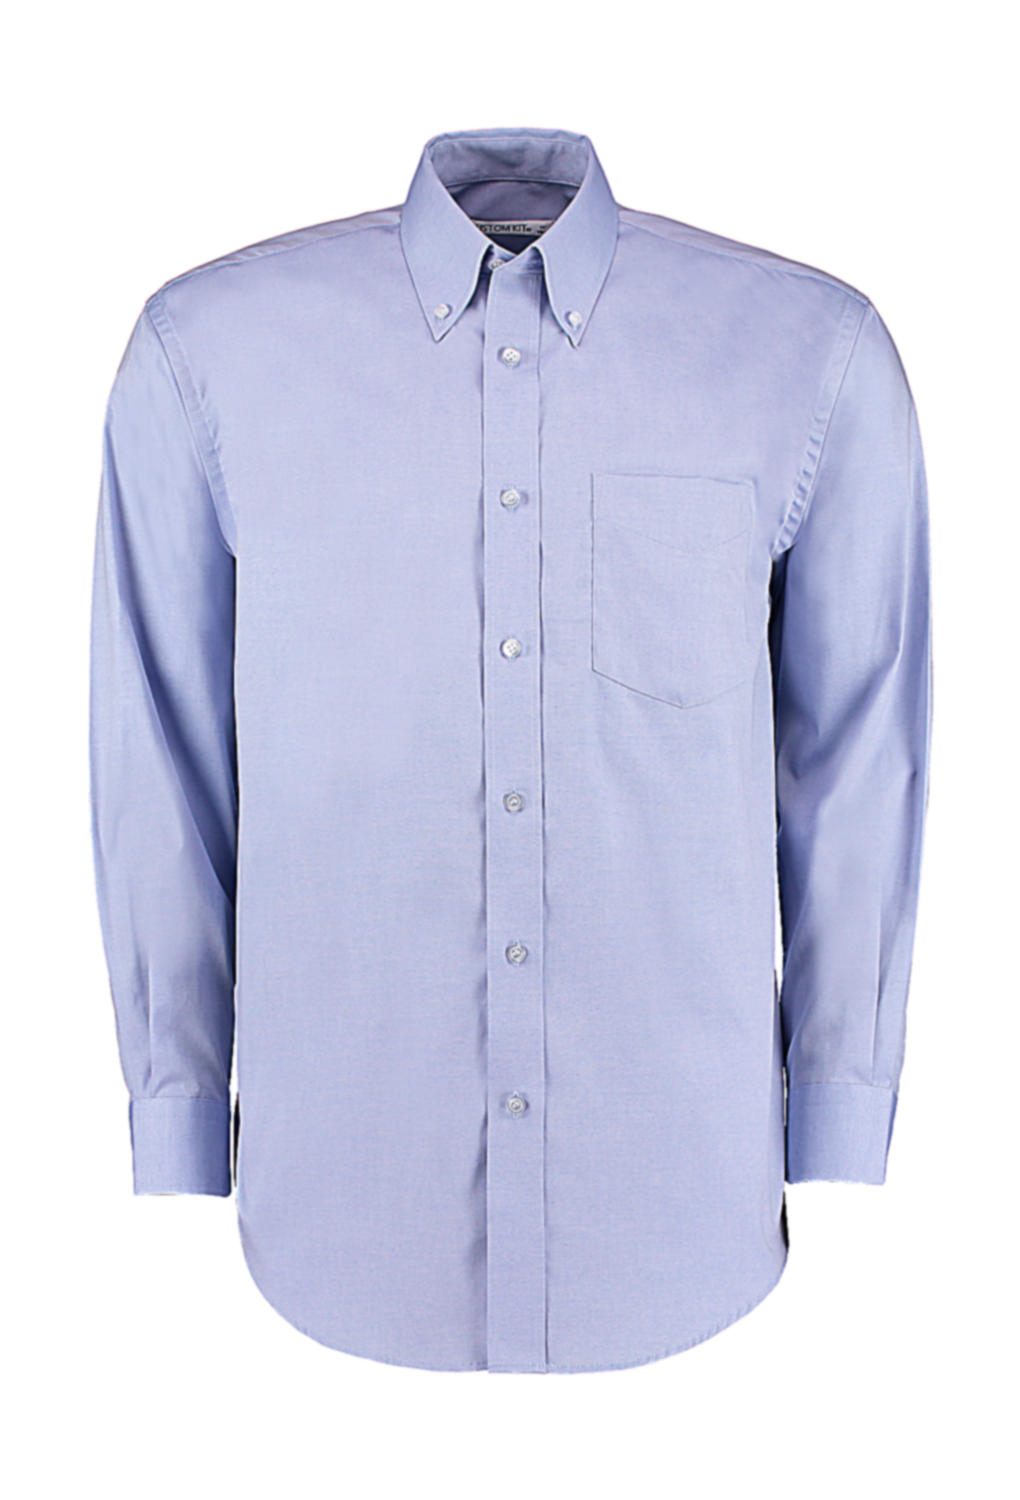 778.11 / Classic Fit Premium Oxford Shirt / Light Blue